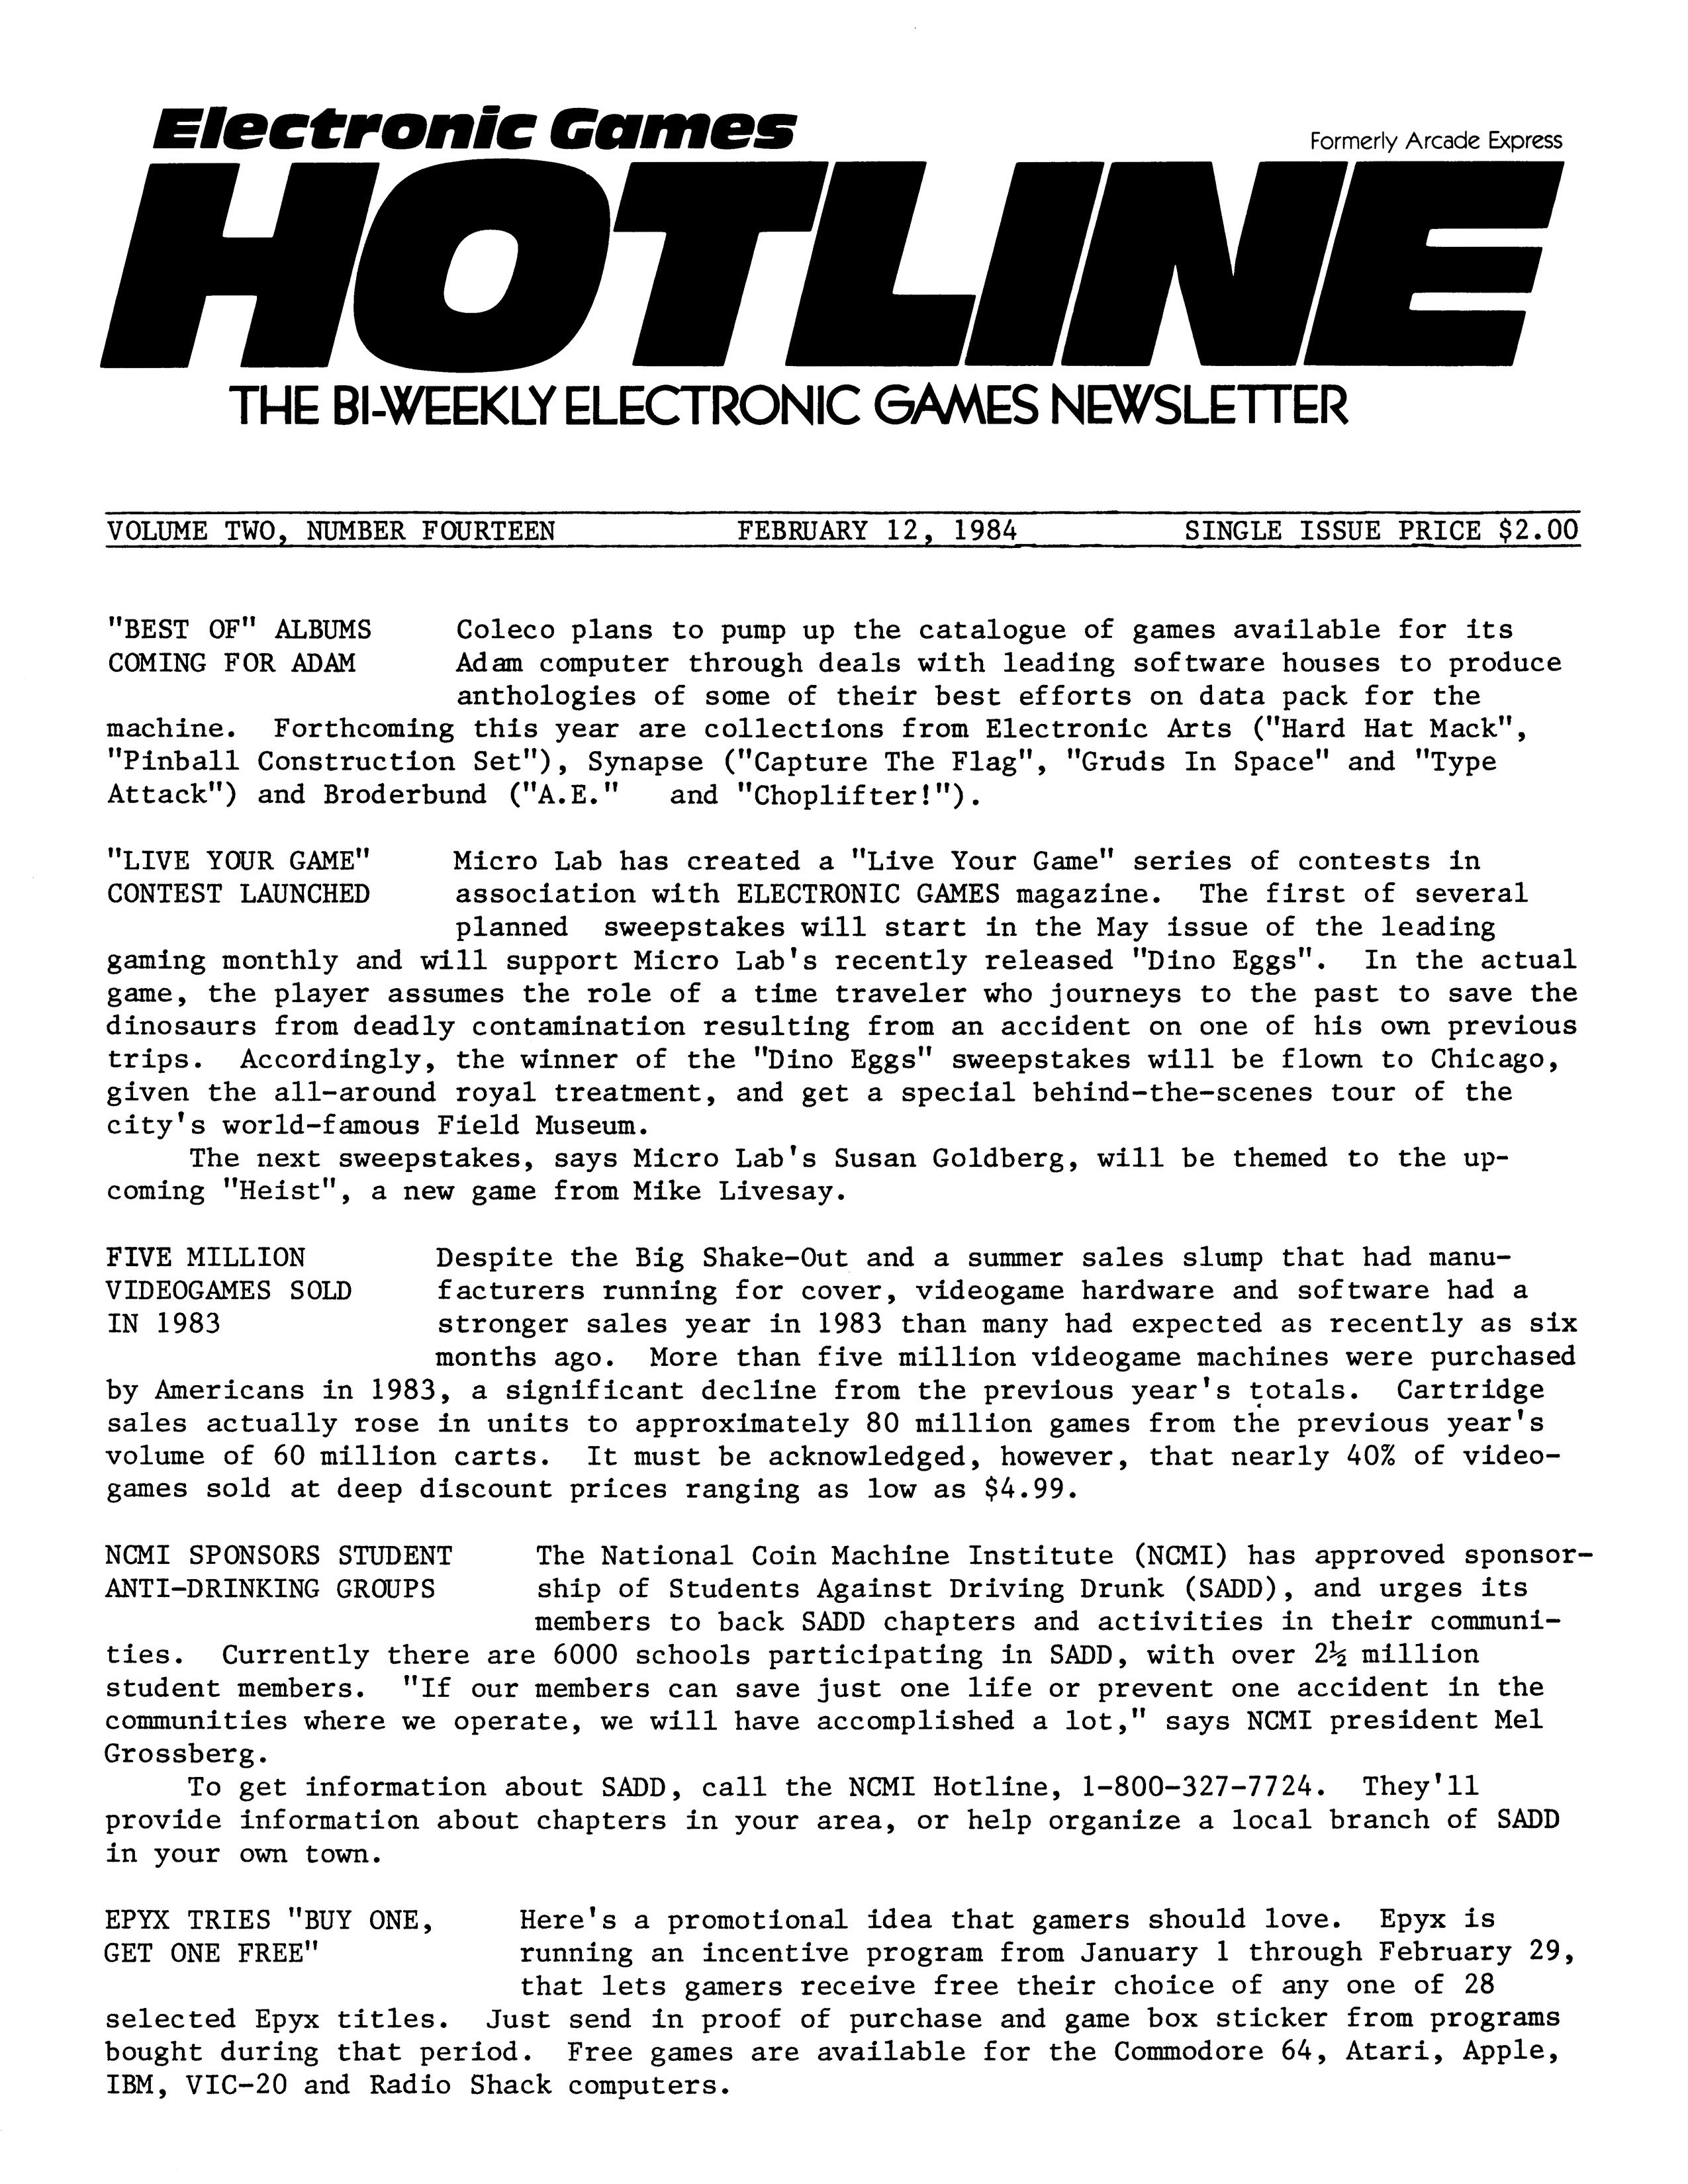 Electronic Games Hotline Volume 2 No. 14 (February 12, 1984)